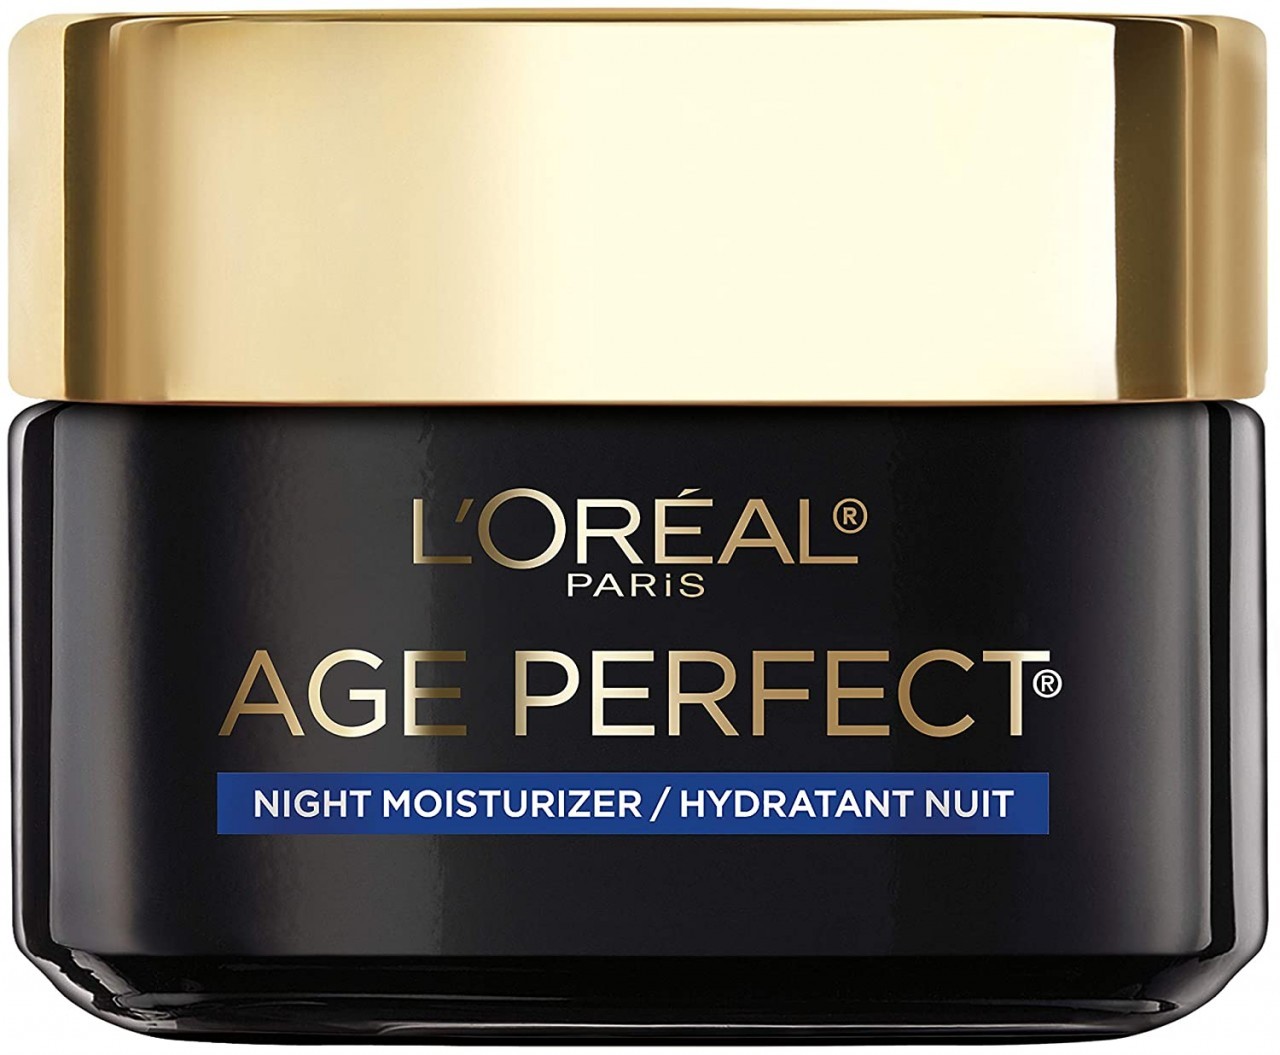 L'Oreal Paris Age Perfect Cell Renewal Anti-Aging Night Moisturizer, 1.7 oz.